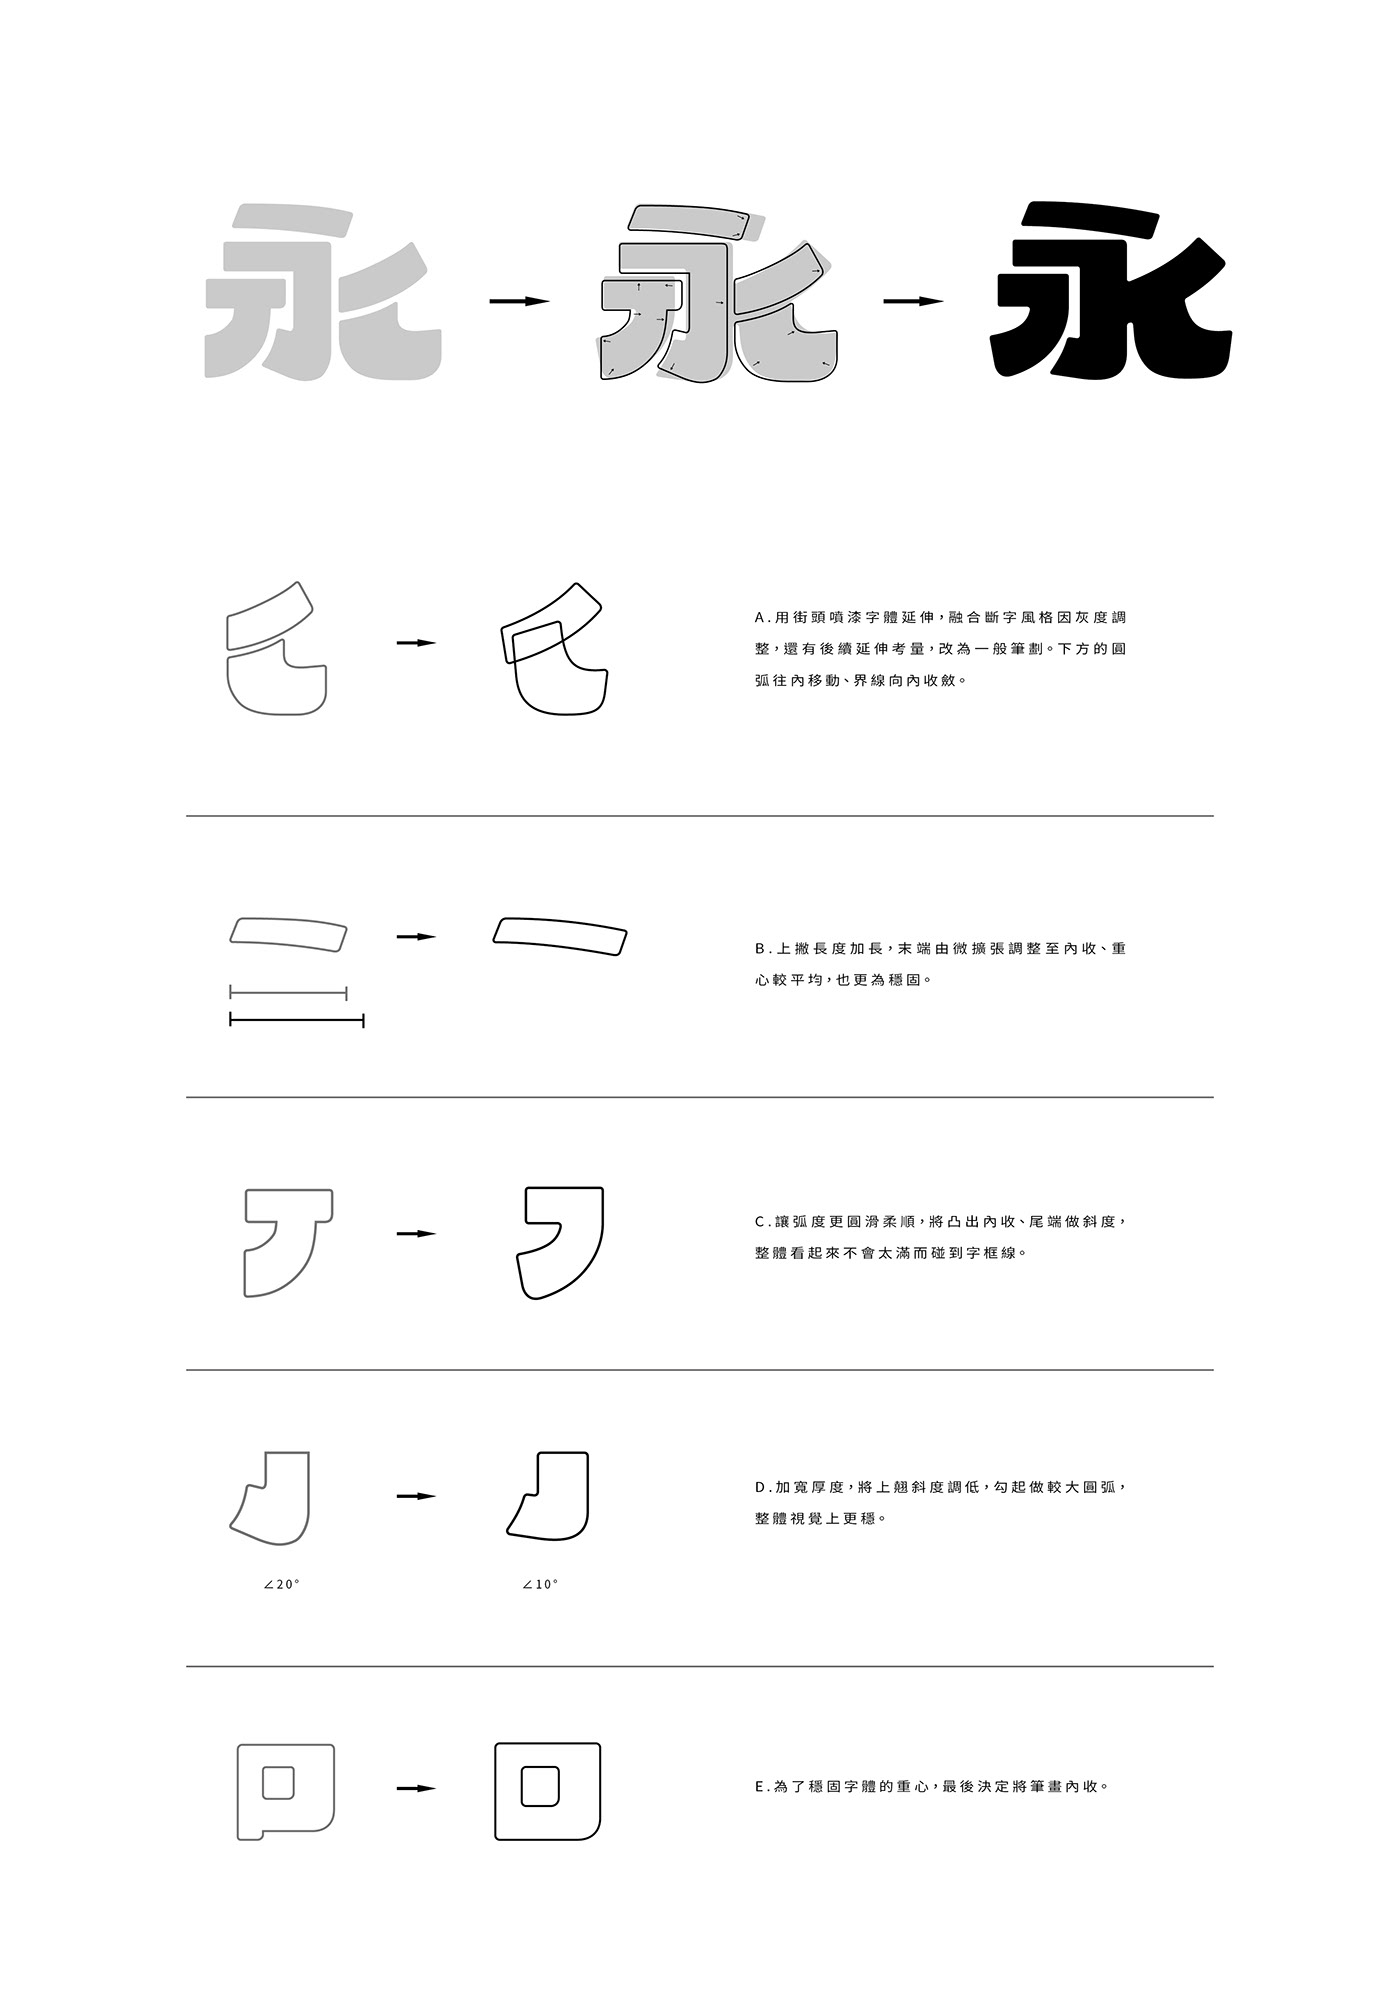 fontsesign graphydesign Liberty taiwan typegang typography   typography design 台灣 字體設計 graphic-design